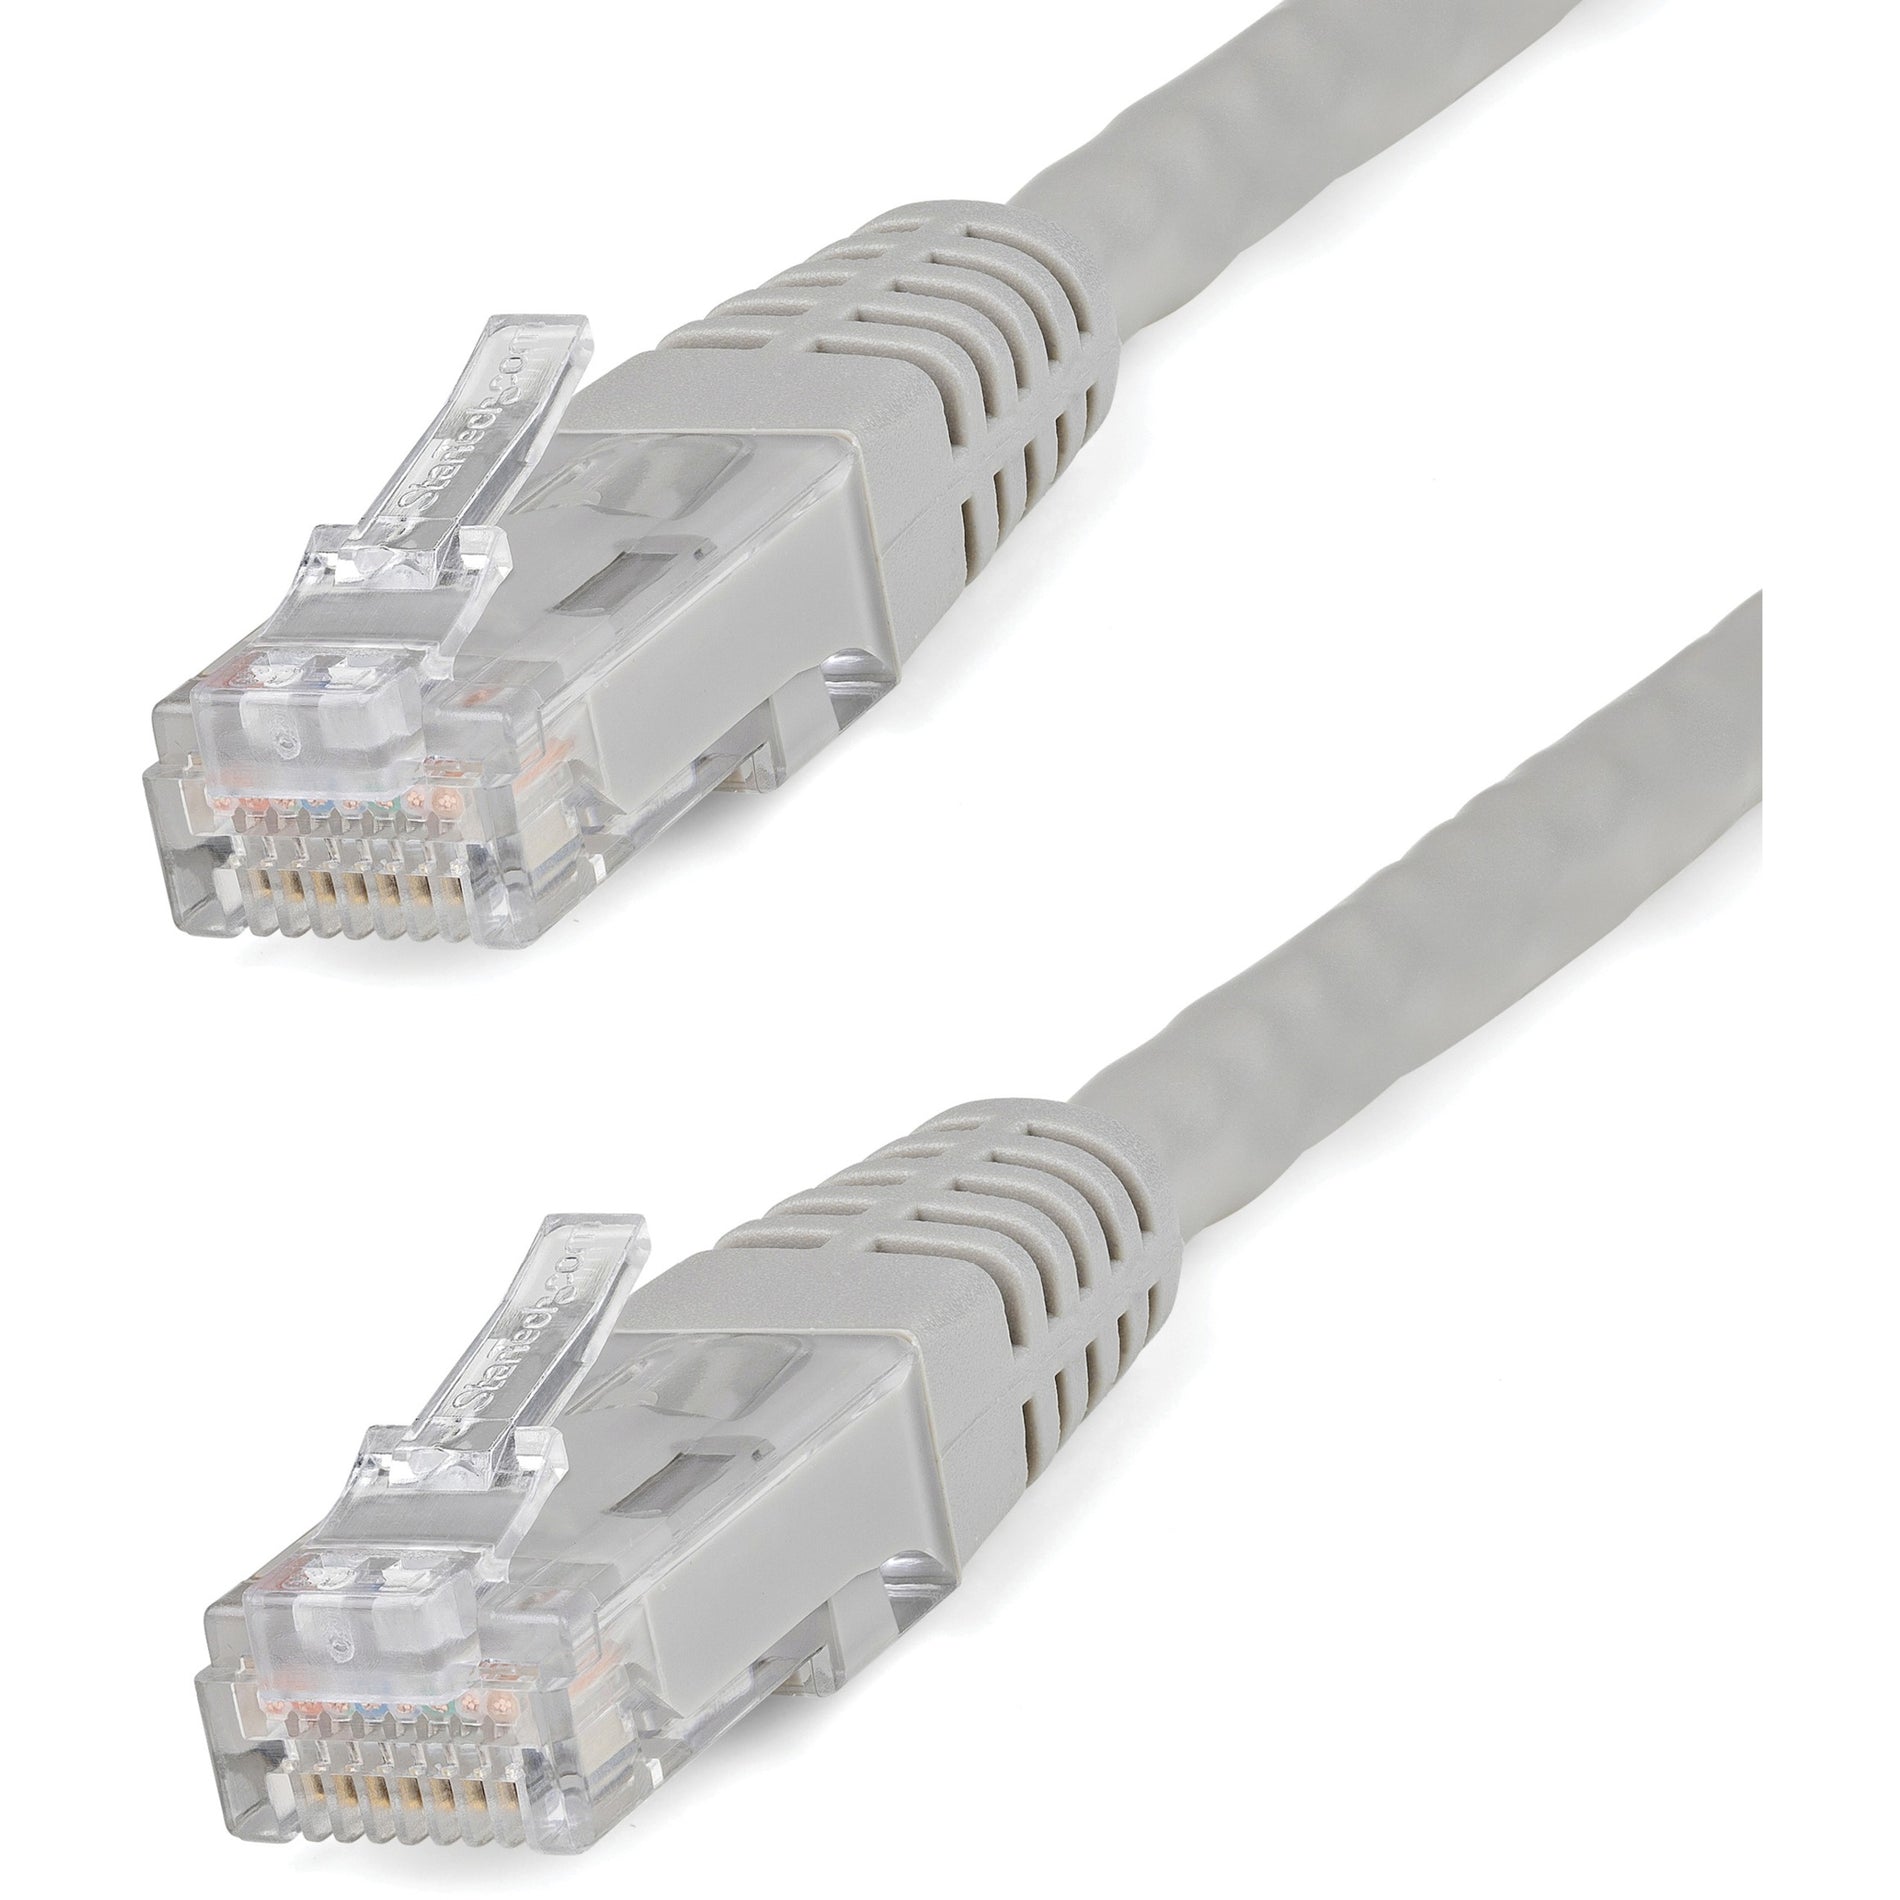 StarTech.com C6PATCH3GR 3ft Gray Cat6 UTP Patch Cable ETL Verified, 10 Gbit/s Data Transfer Rate, Gold Plated Connectors